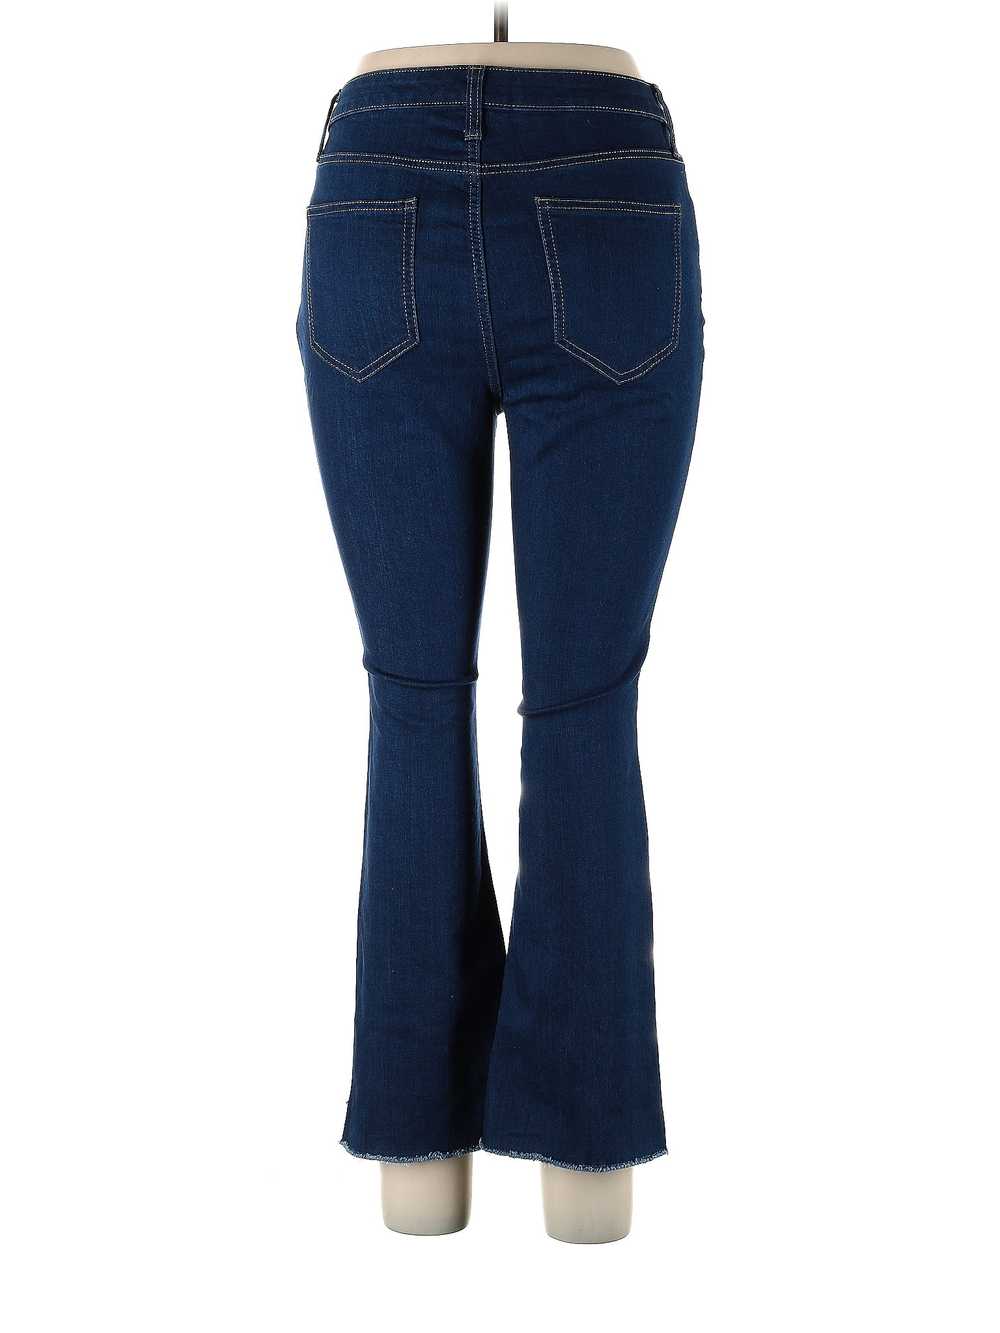 Nine West Women Blue Jeans 12 - image 2